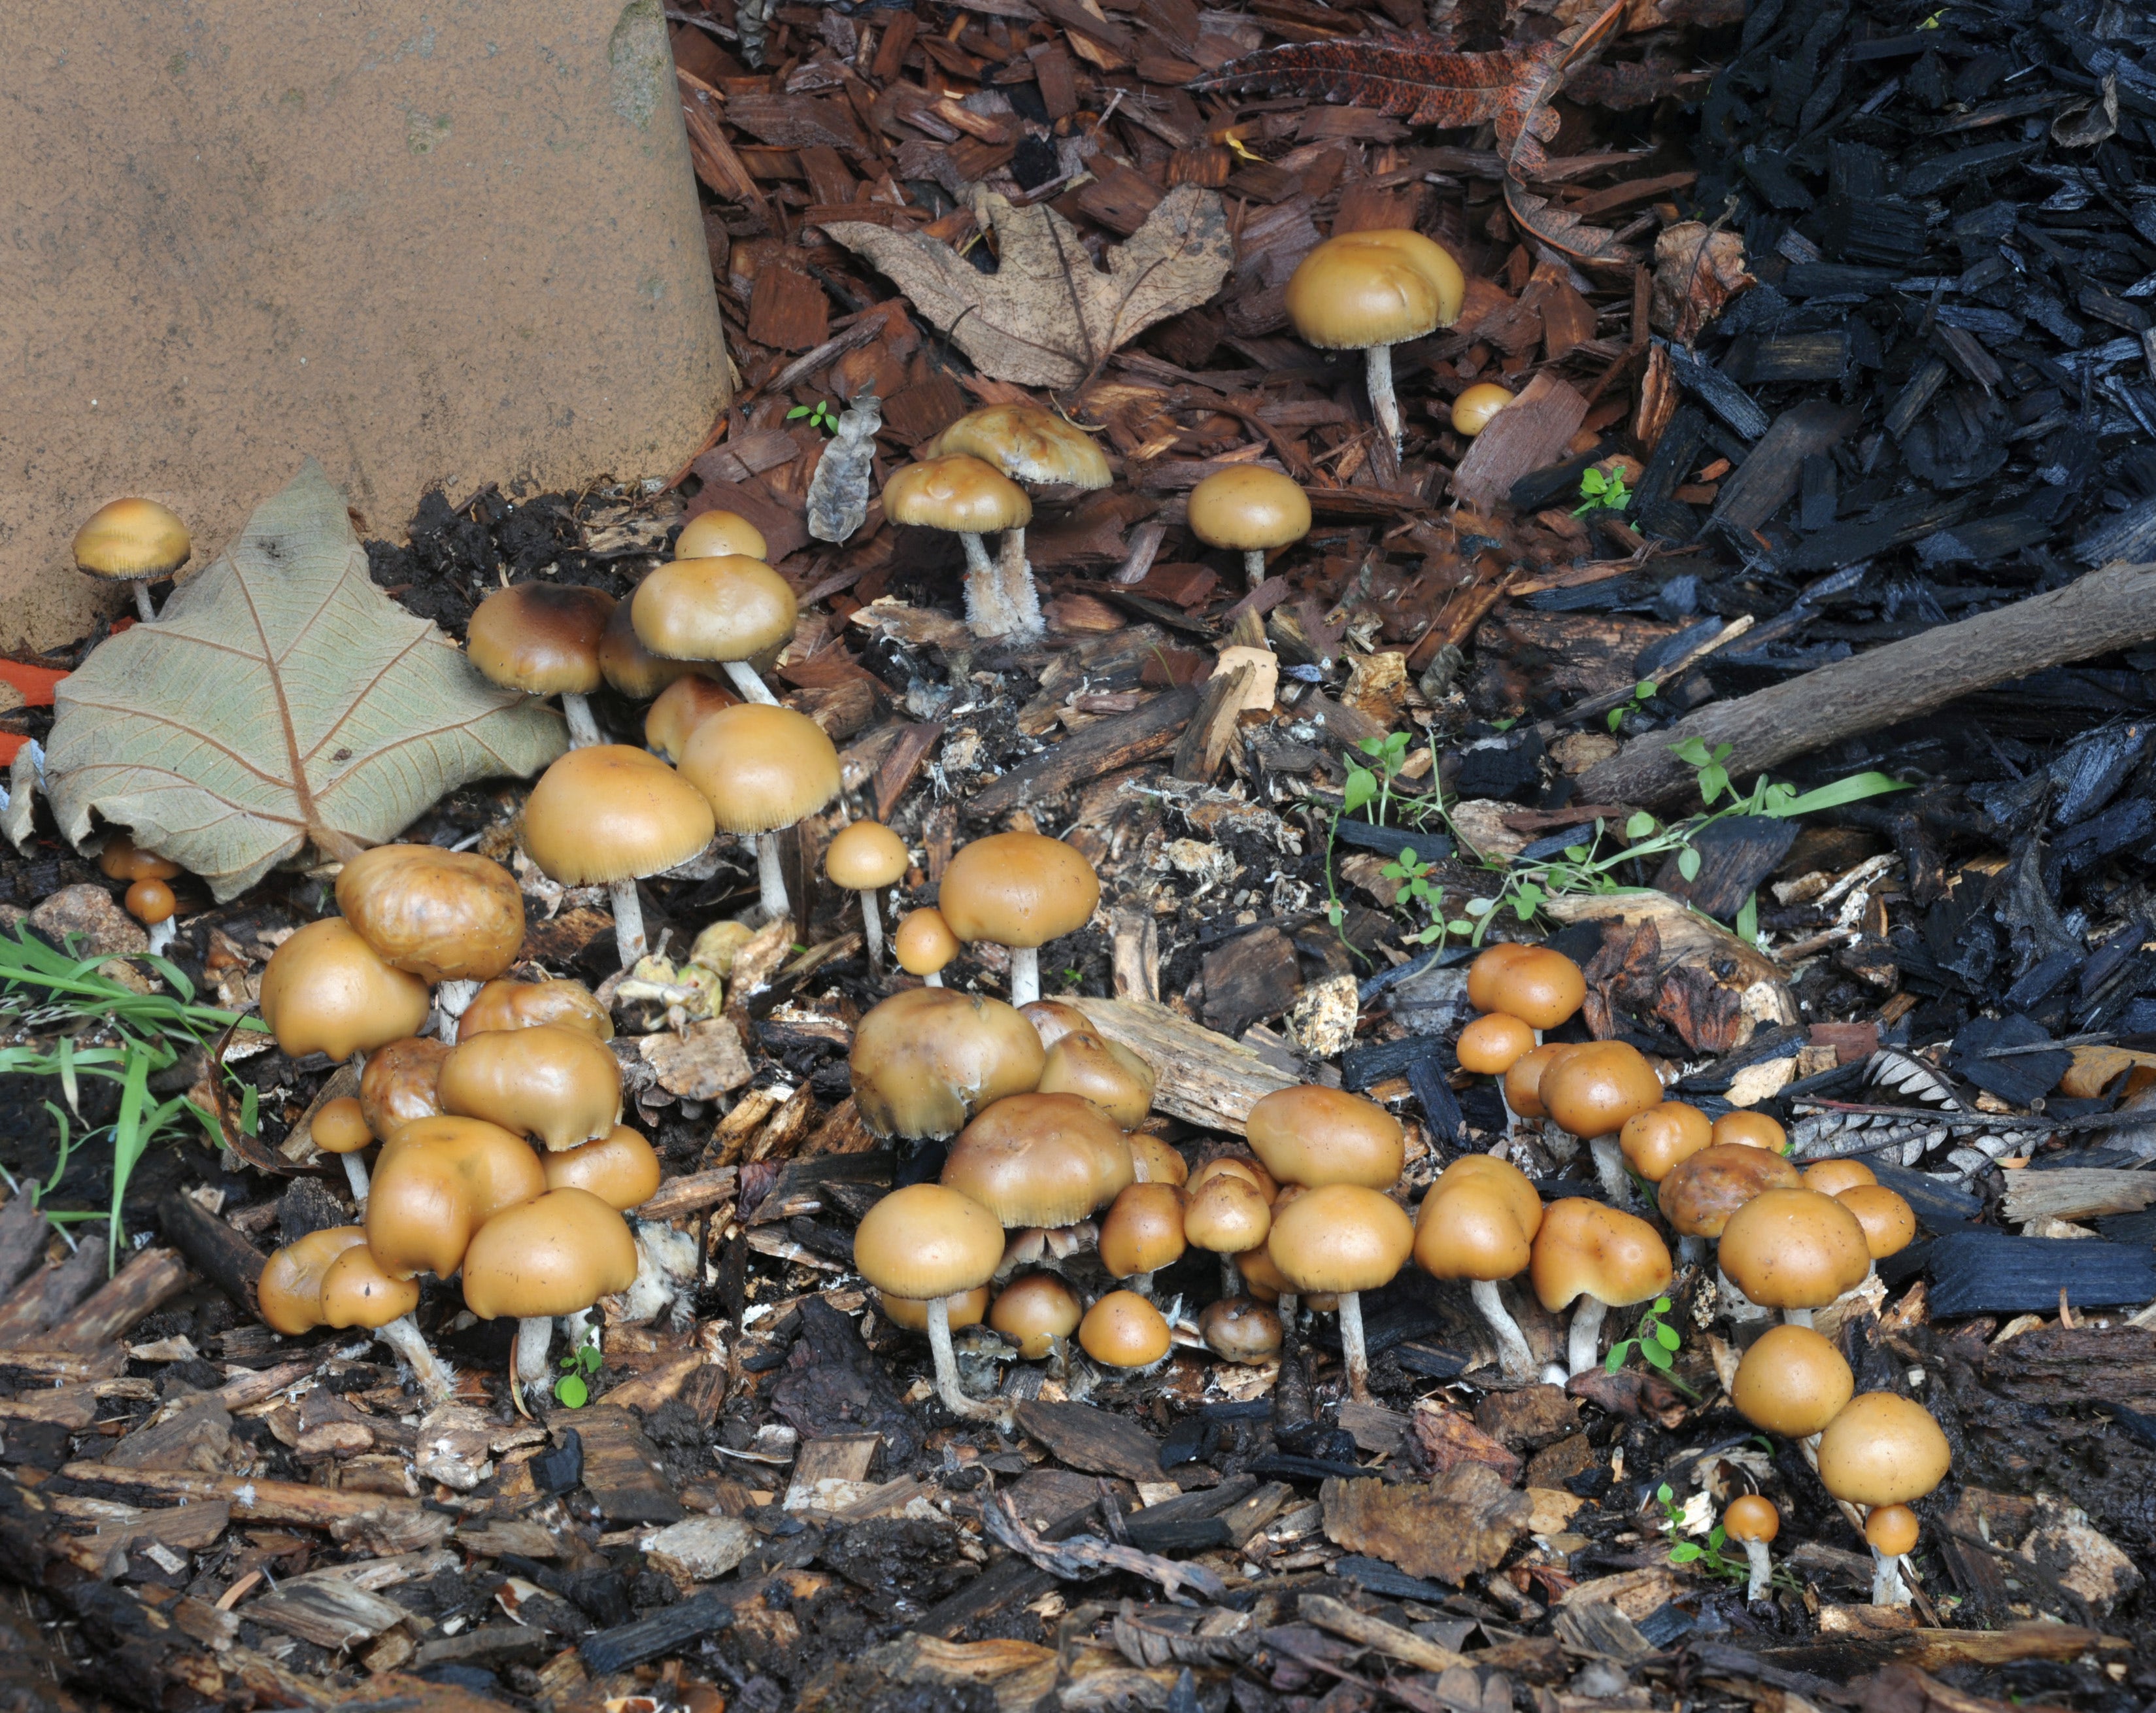 Santa Cruz Becomes 3rd US City To Decriminalize Magic Mushrooms